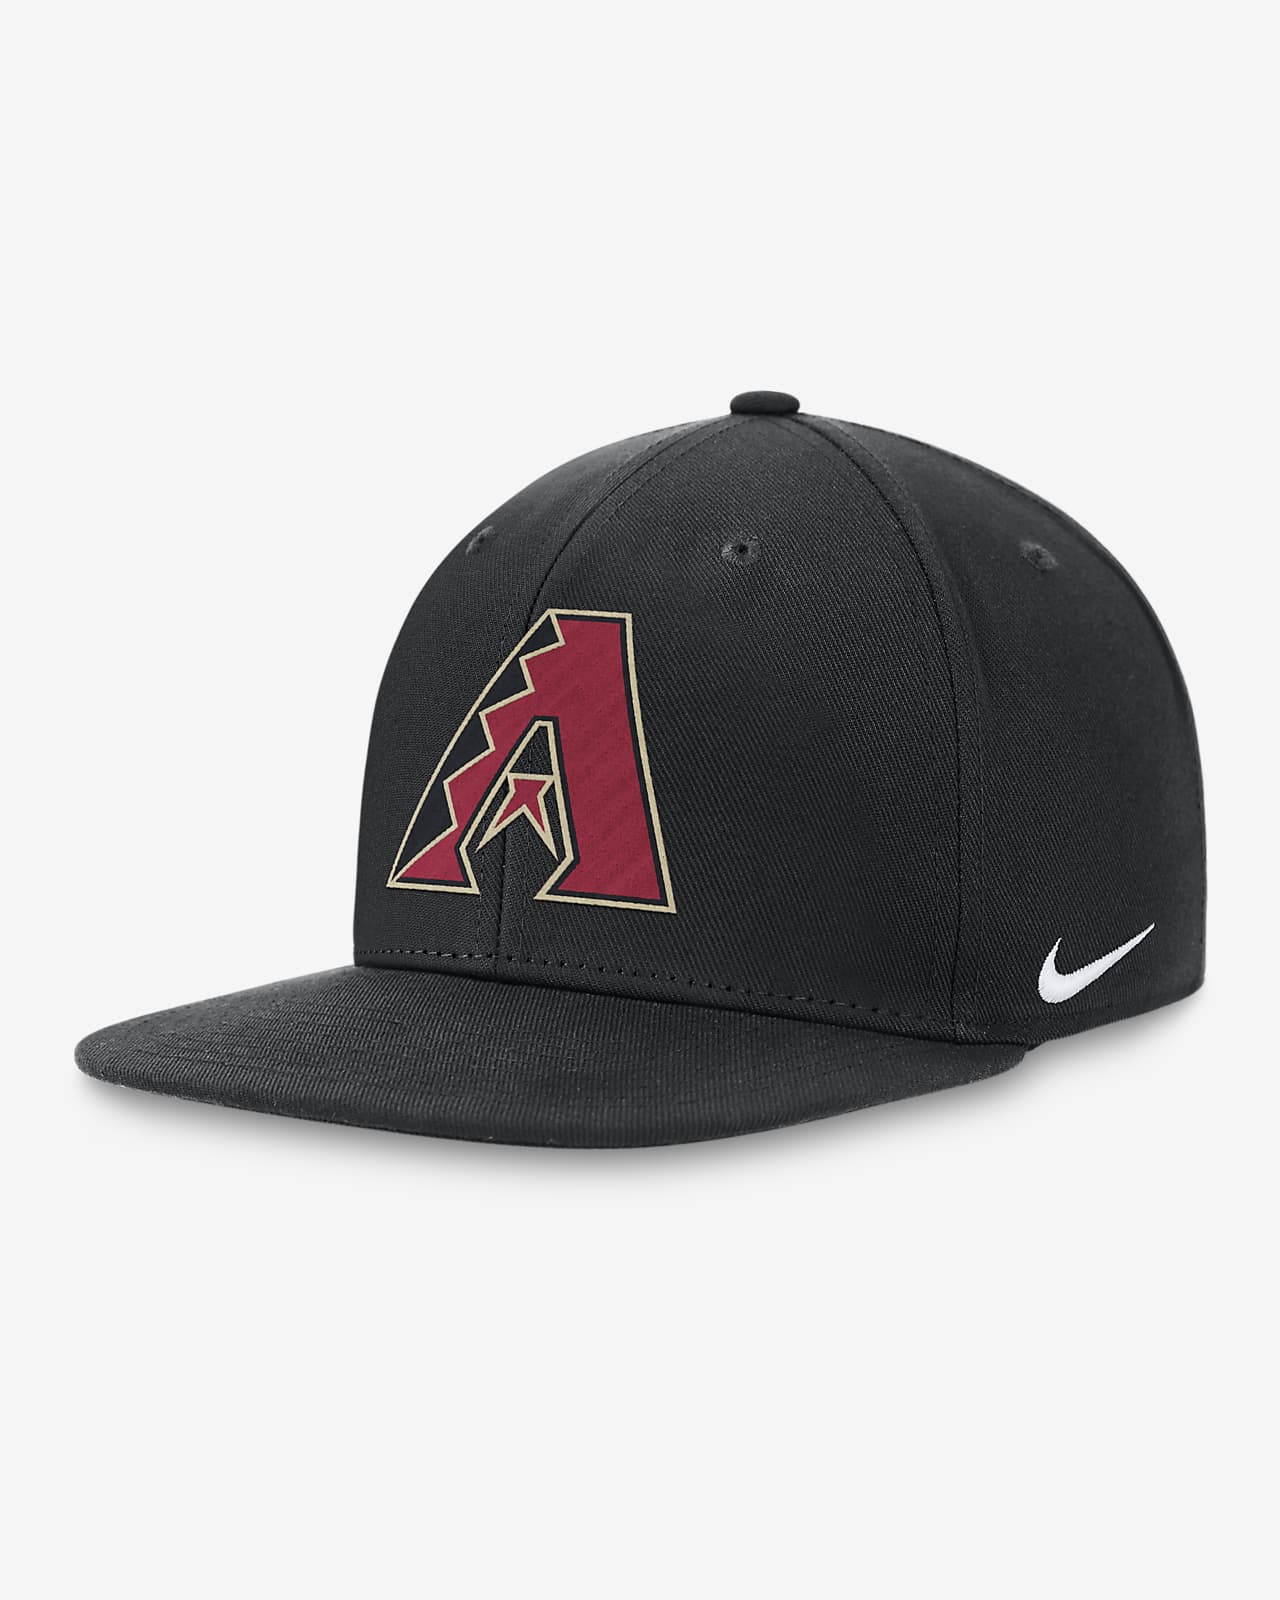 Arizona Diamondbacks Hat, Diamondbacks Hats, Baseball Cap